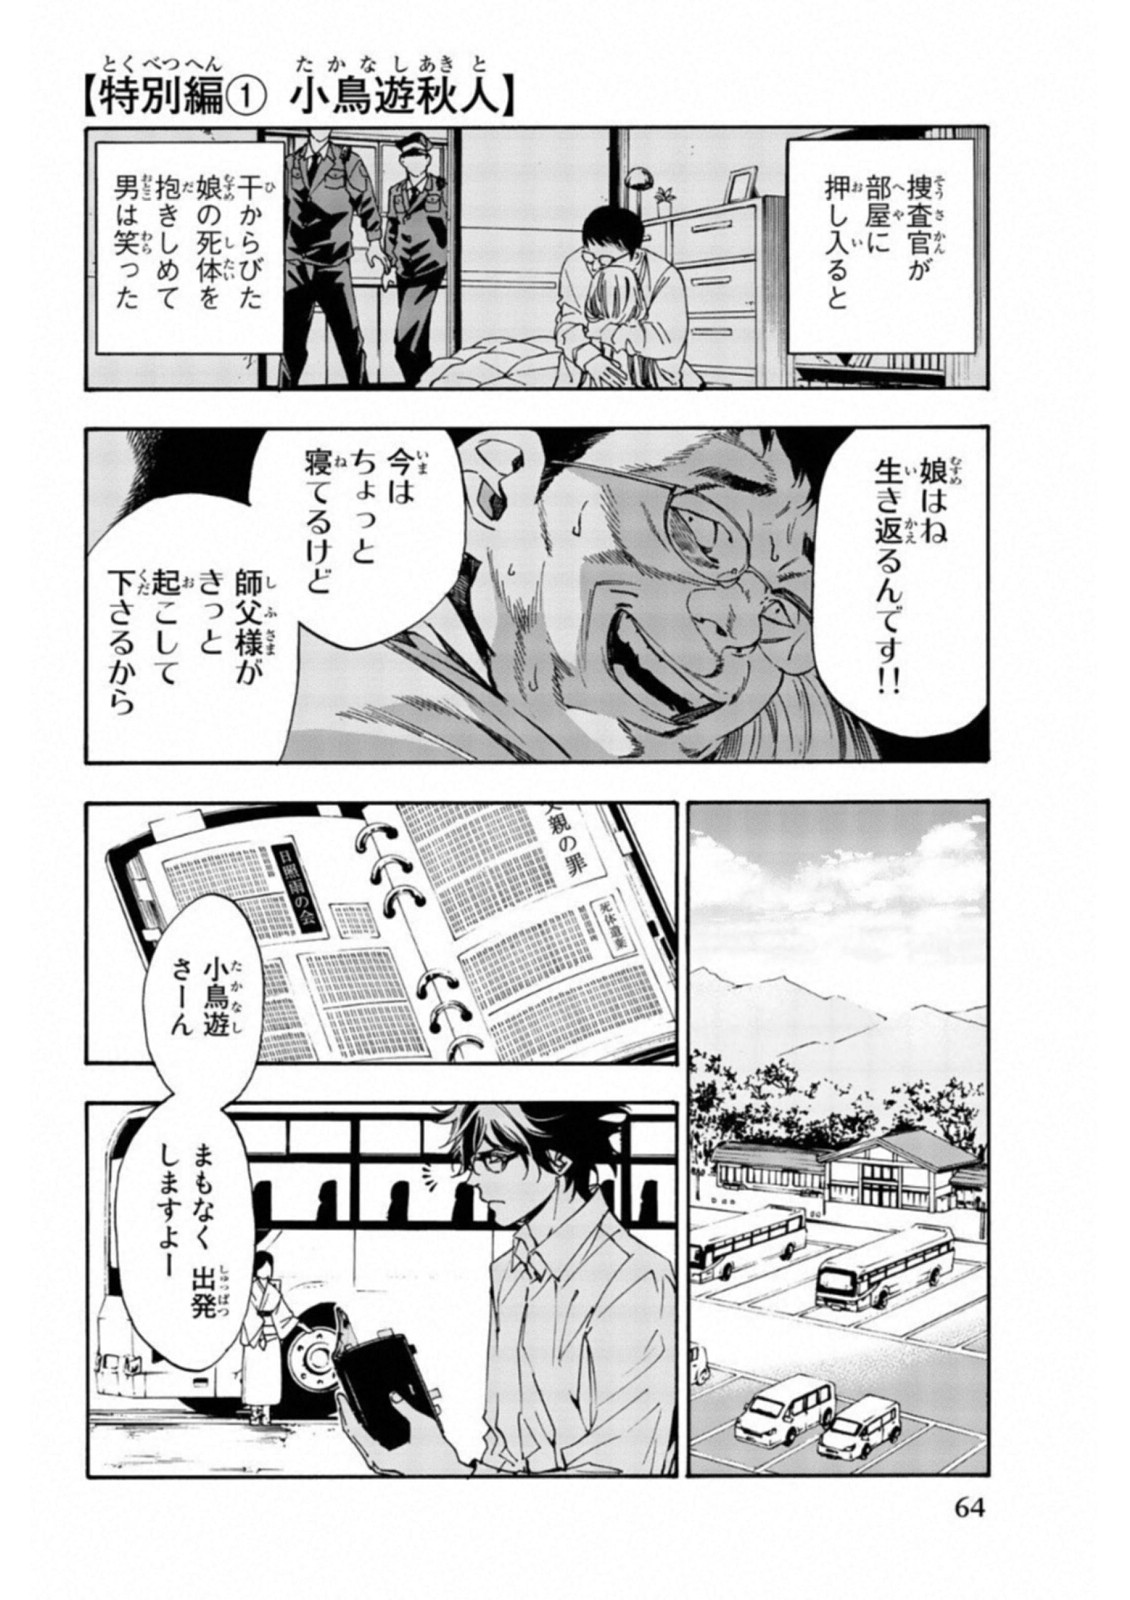 Zetsubou no Rakuen - Chapter 35.1 - Page 1